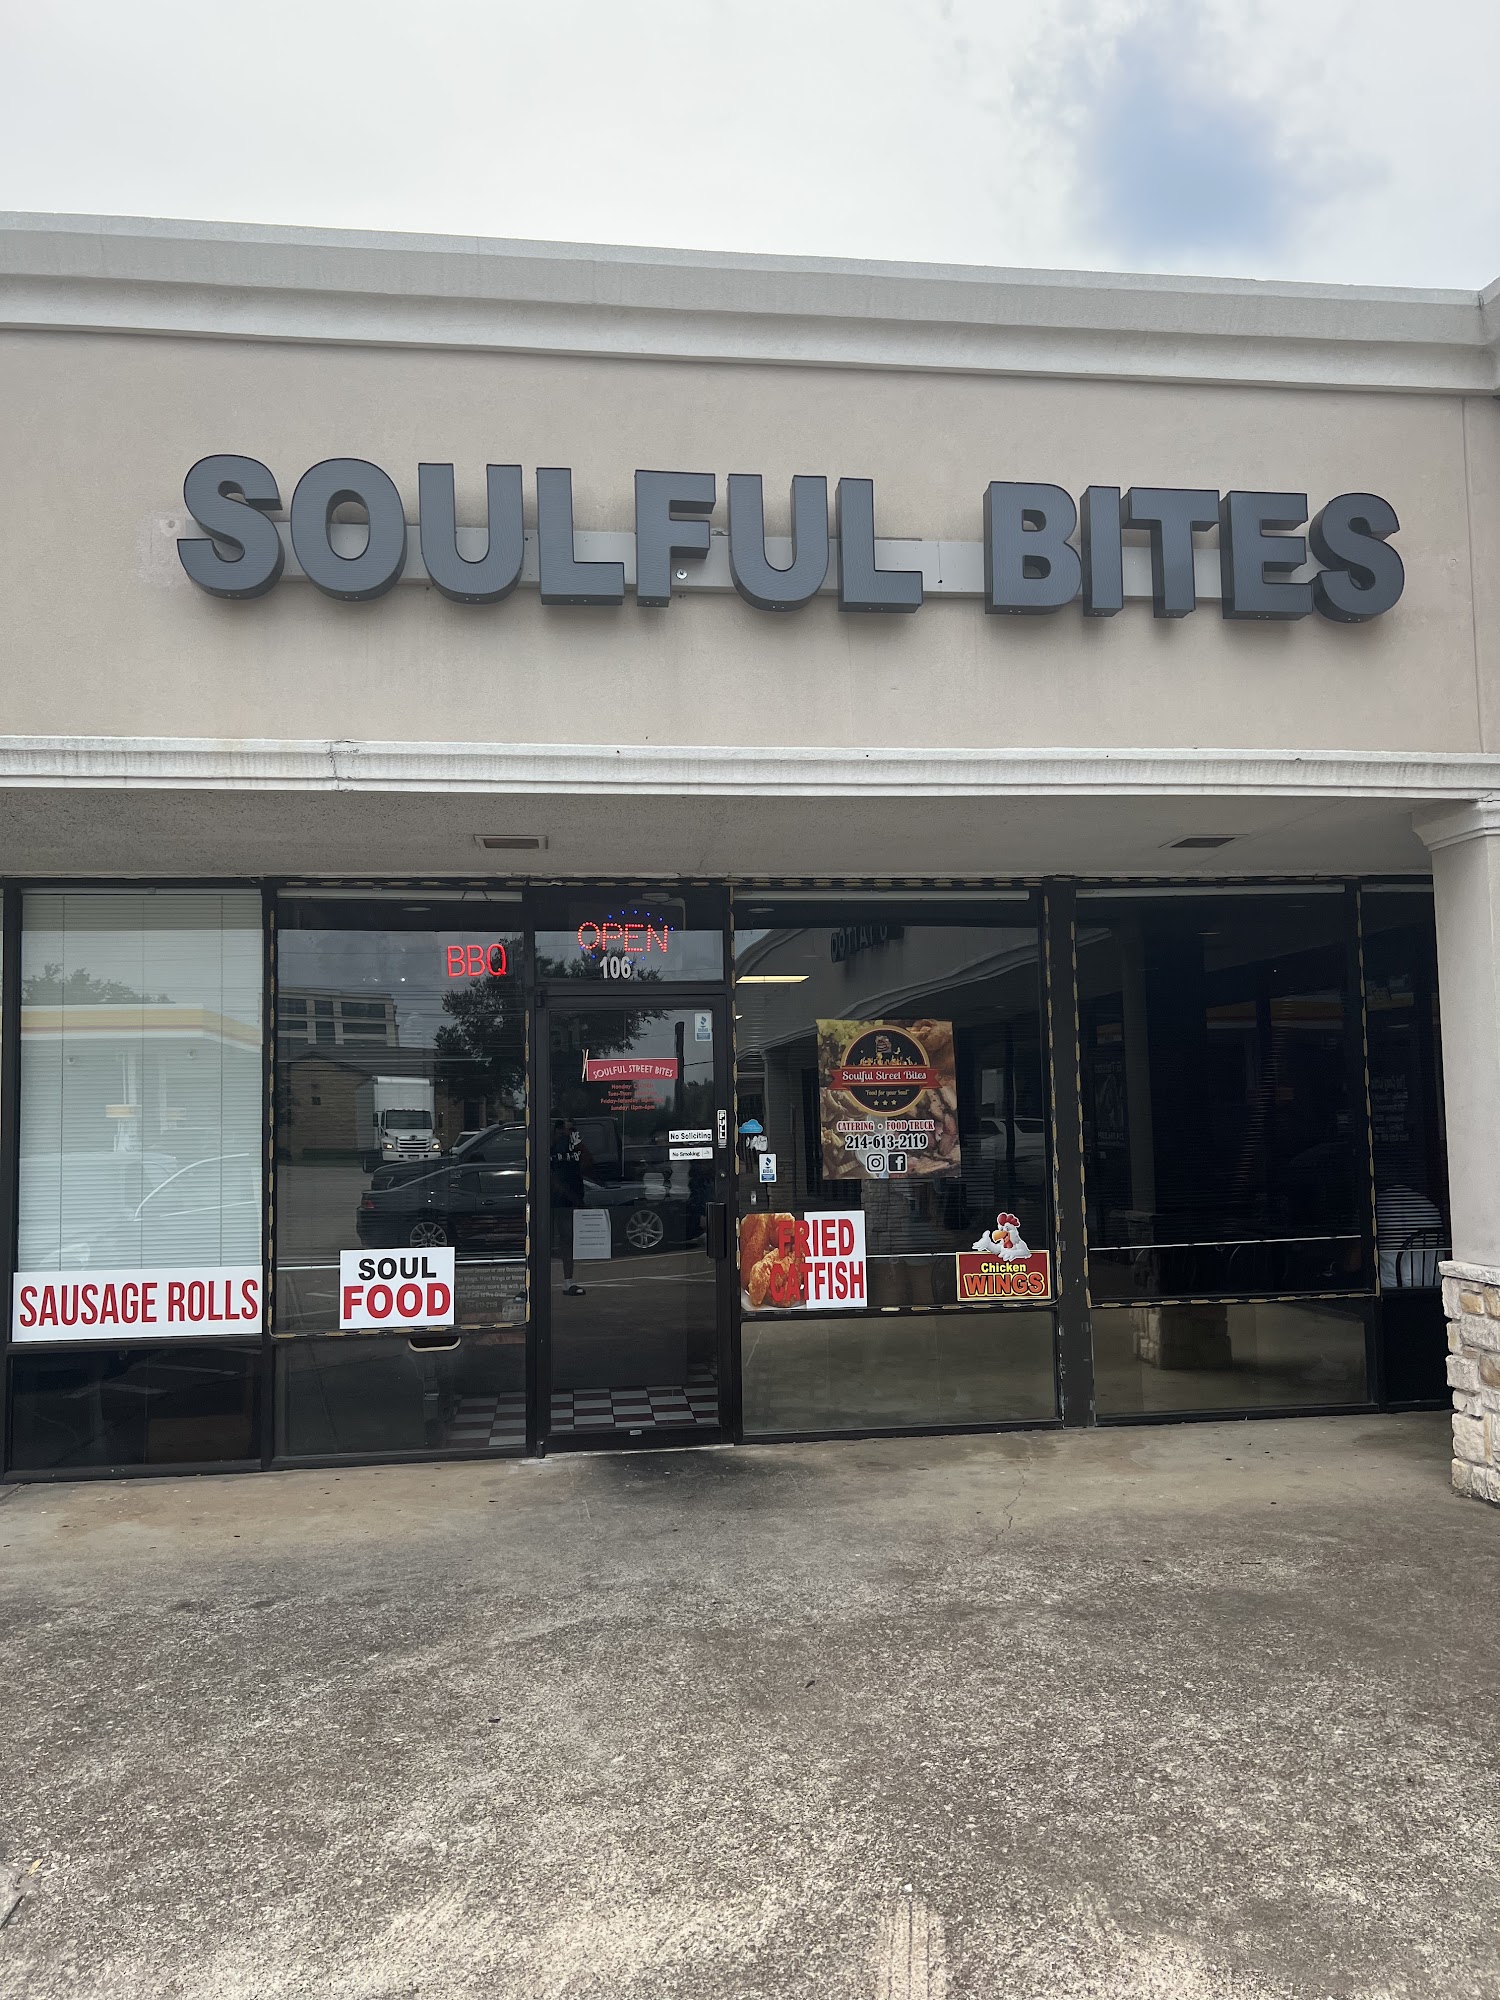 Soulful Street Bites